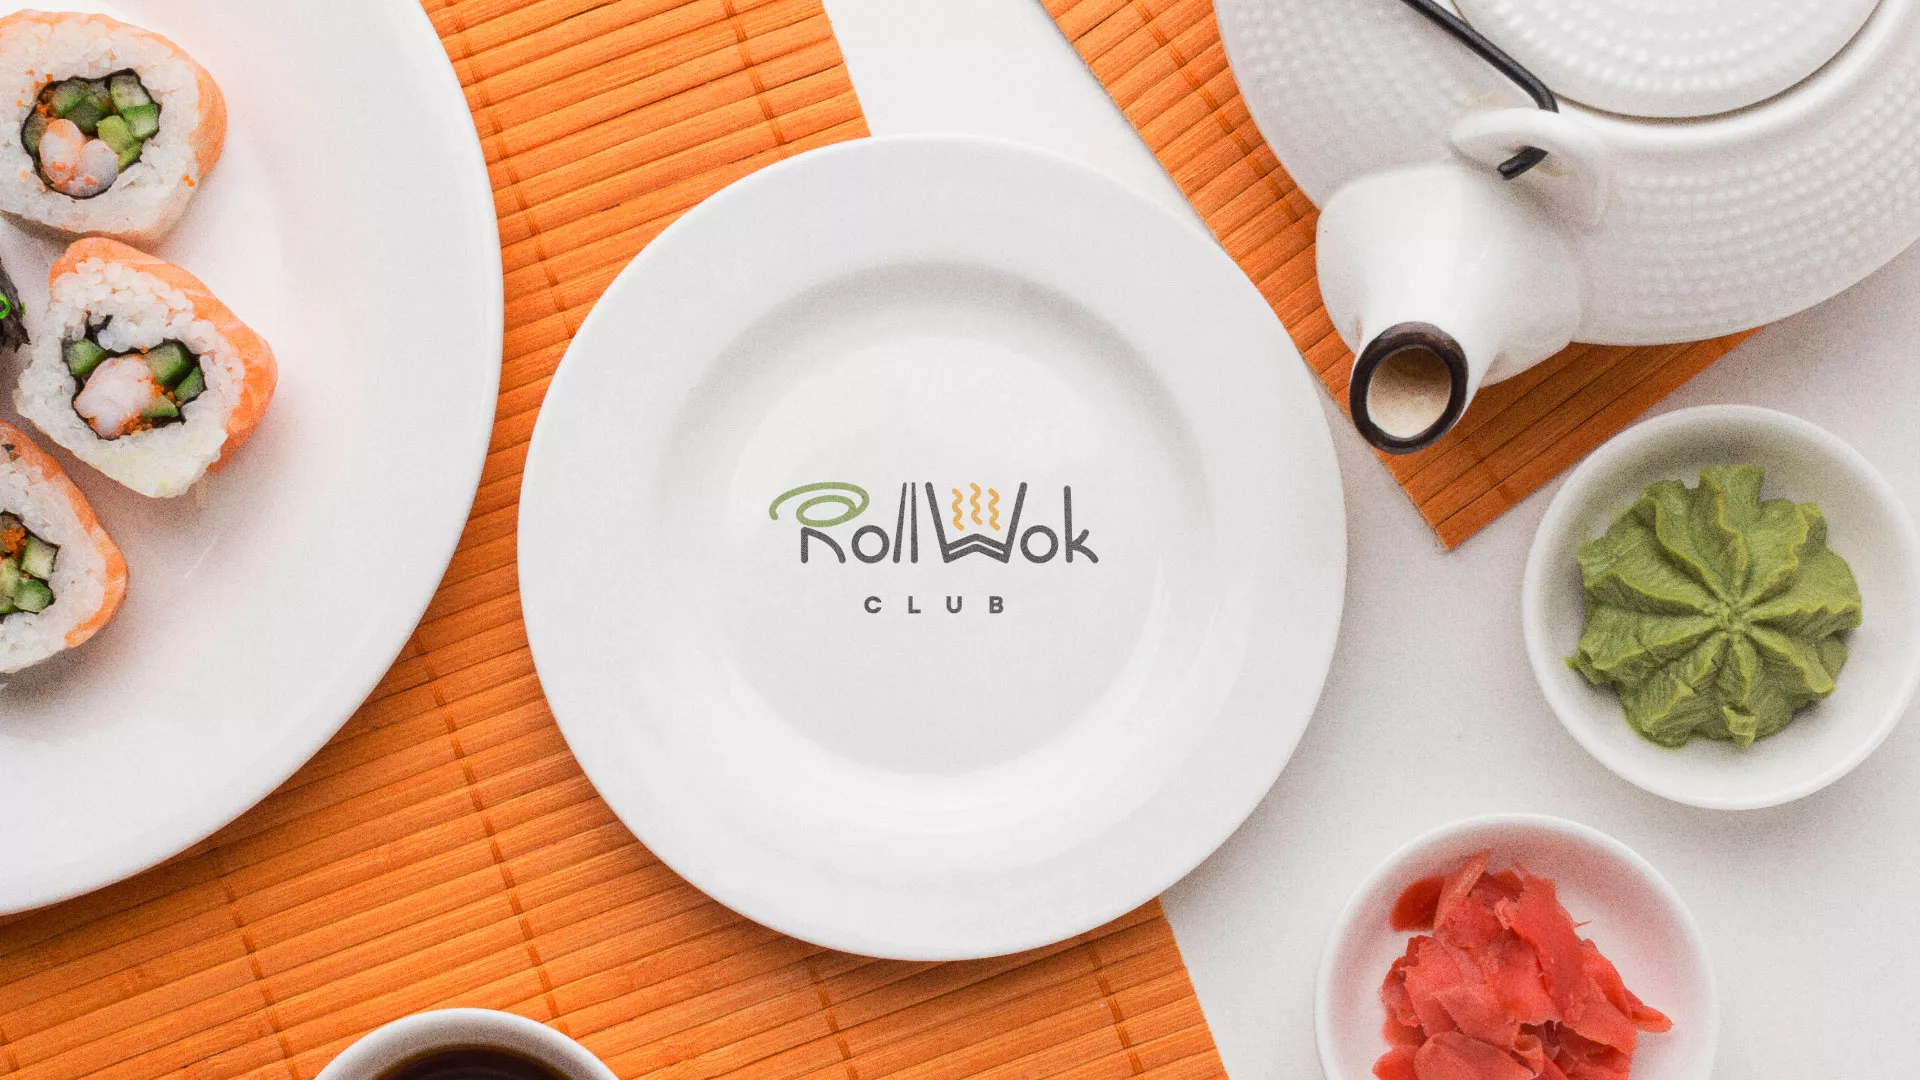 Разработка логотипа и фирменного стиля суши-бара «Roll Wok Club» в Новотроицке